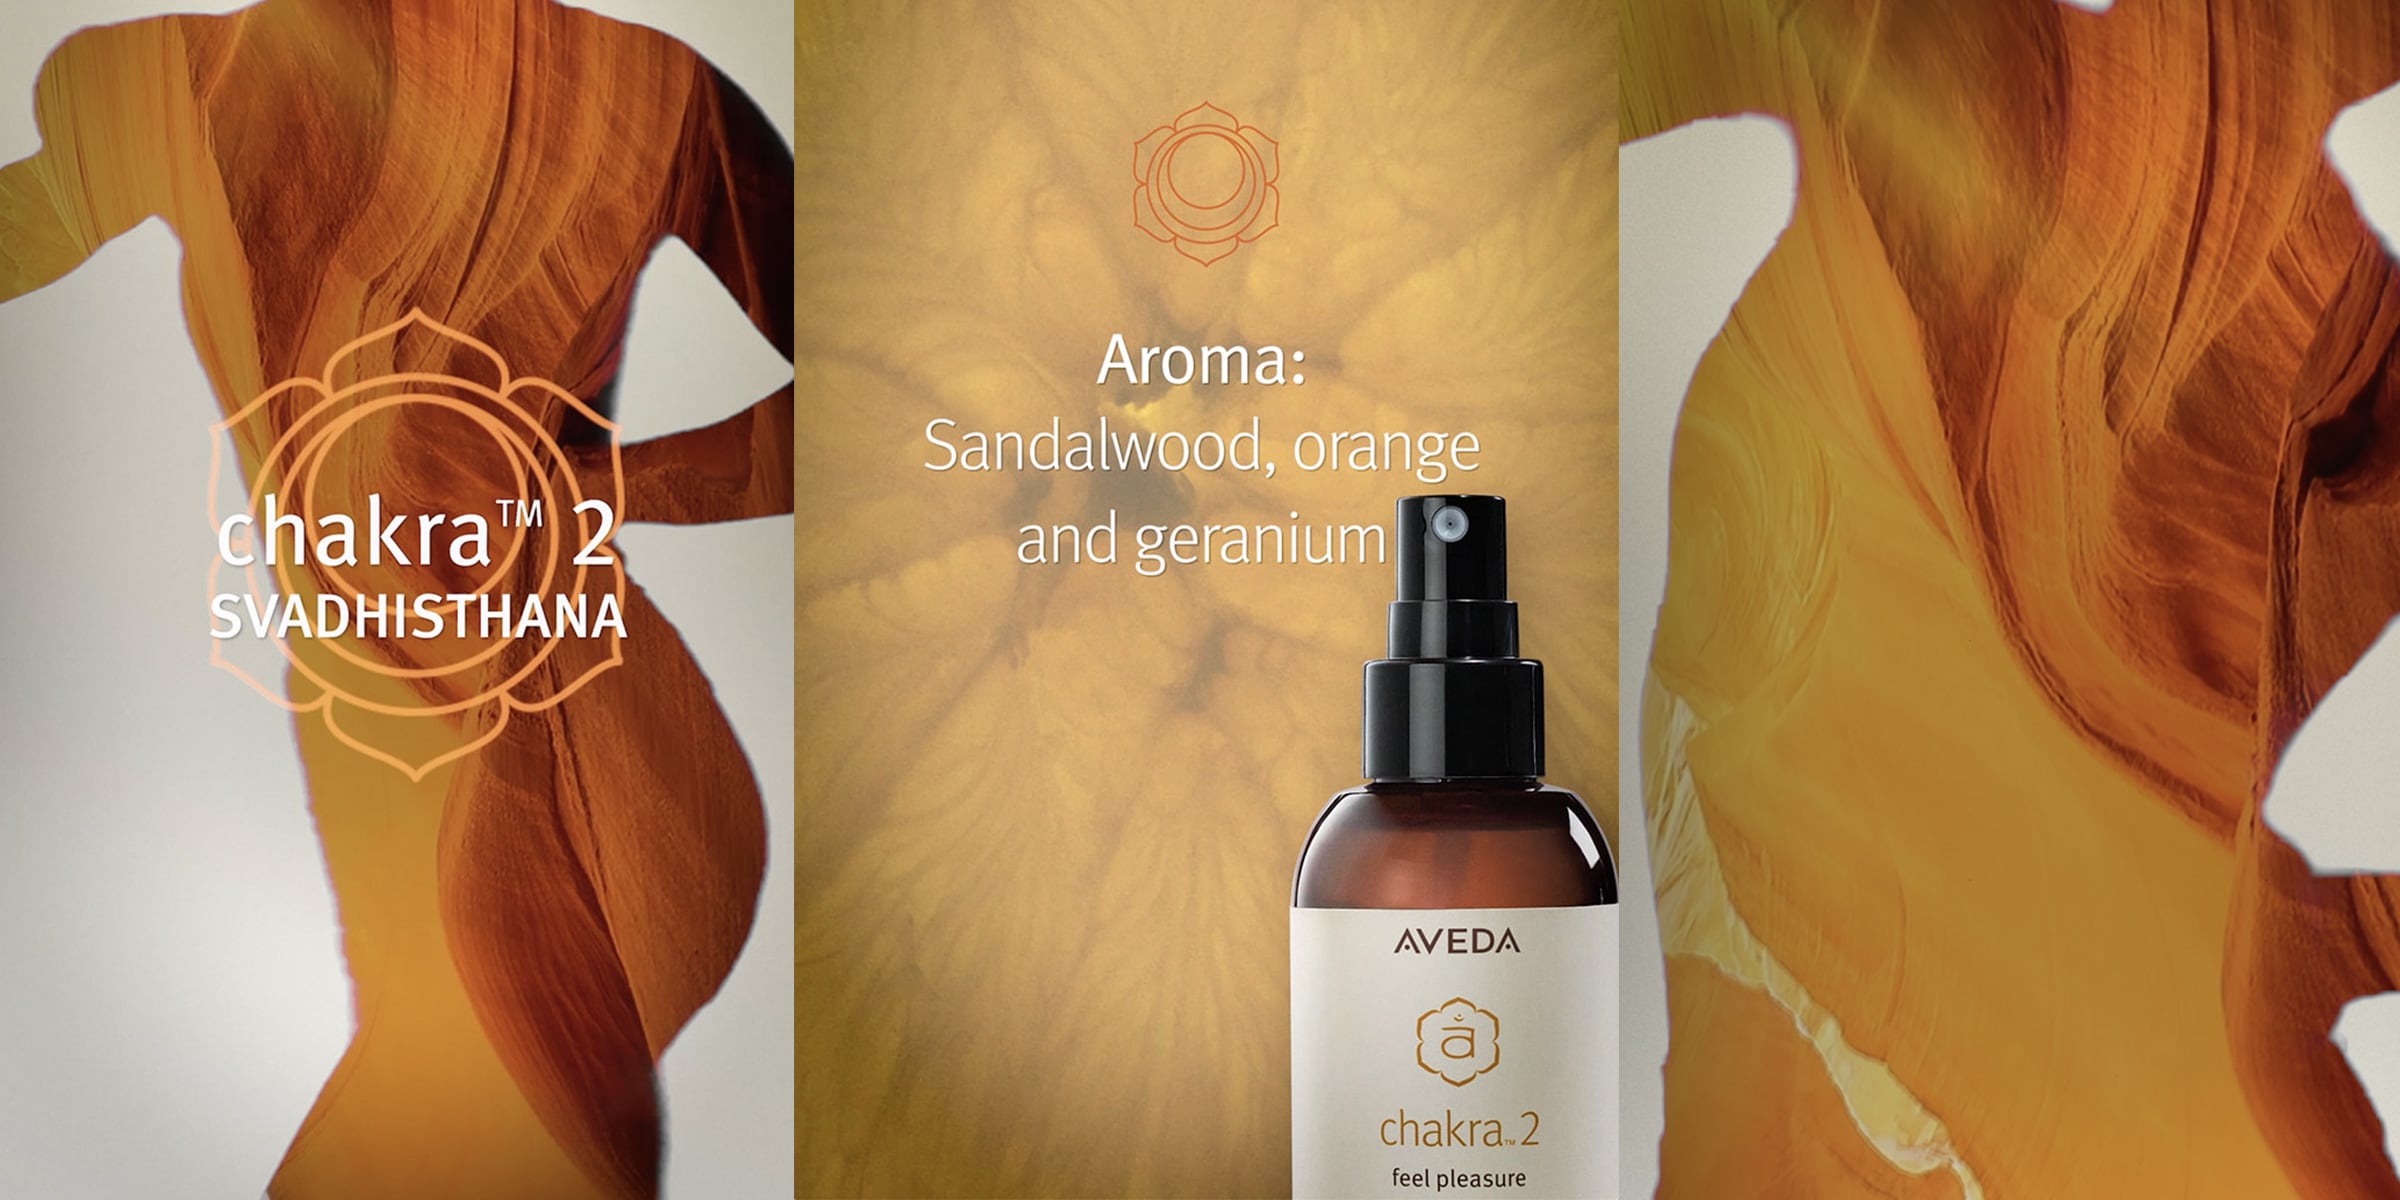 Chakra 2 aroma includes saldalwood, orange and geranium